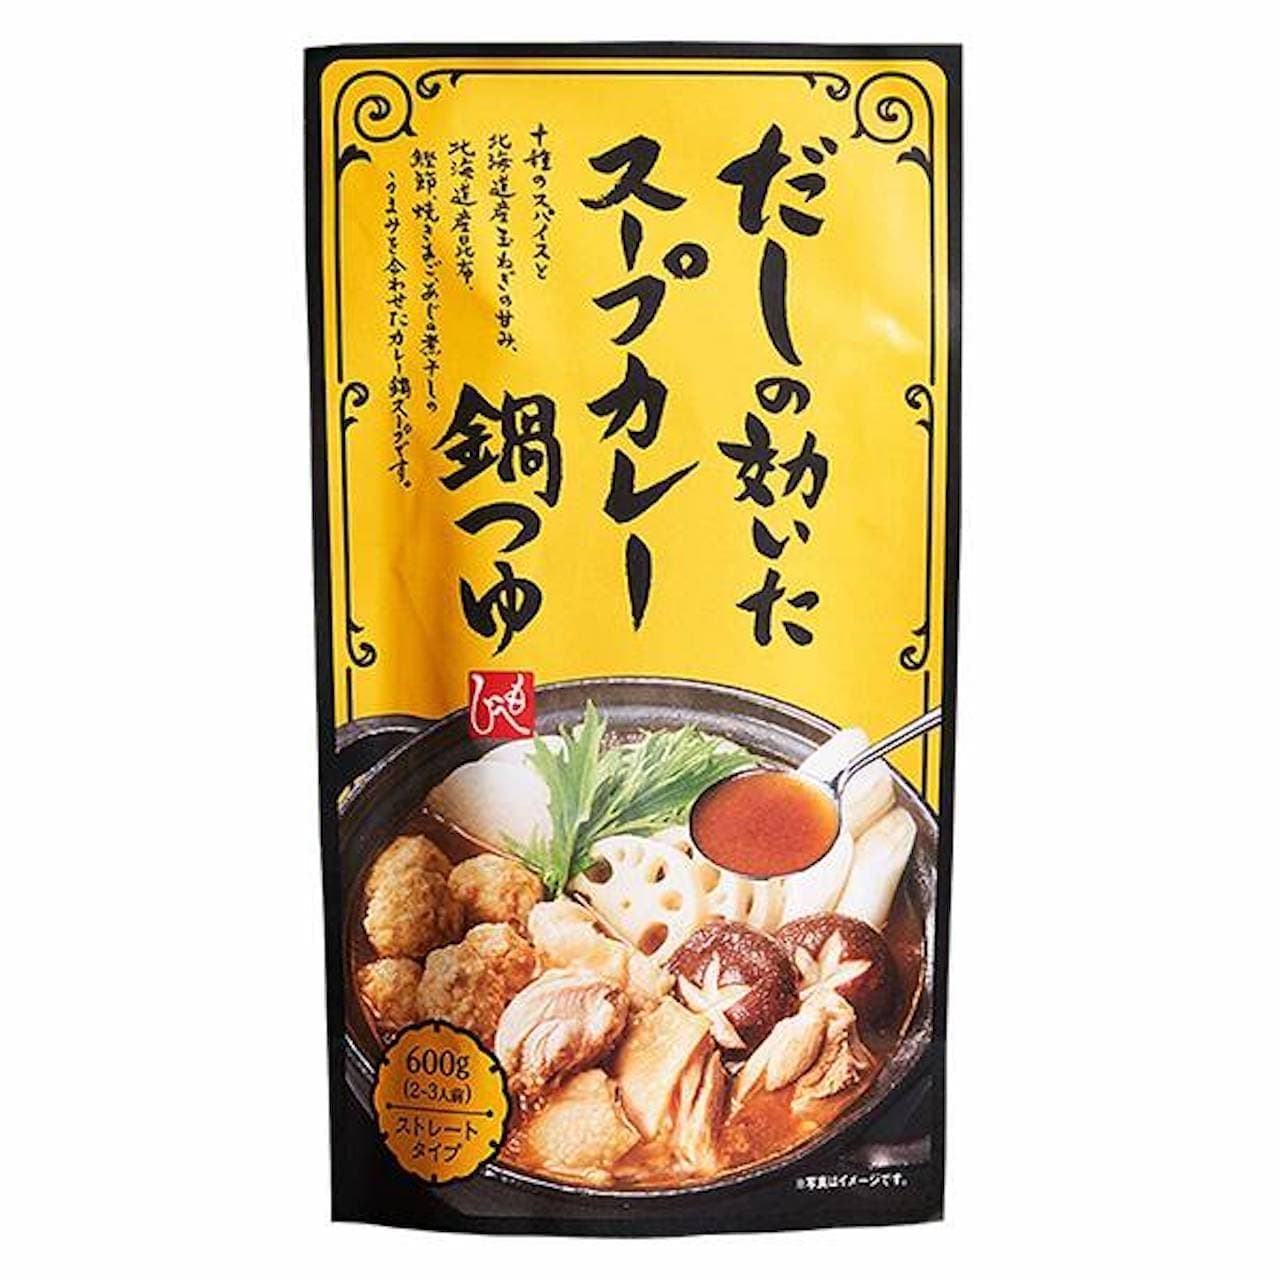 KALDI "soup curry nabe tsuyu with dashi" (soup curry nabe tsuyu with dashi)